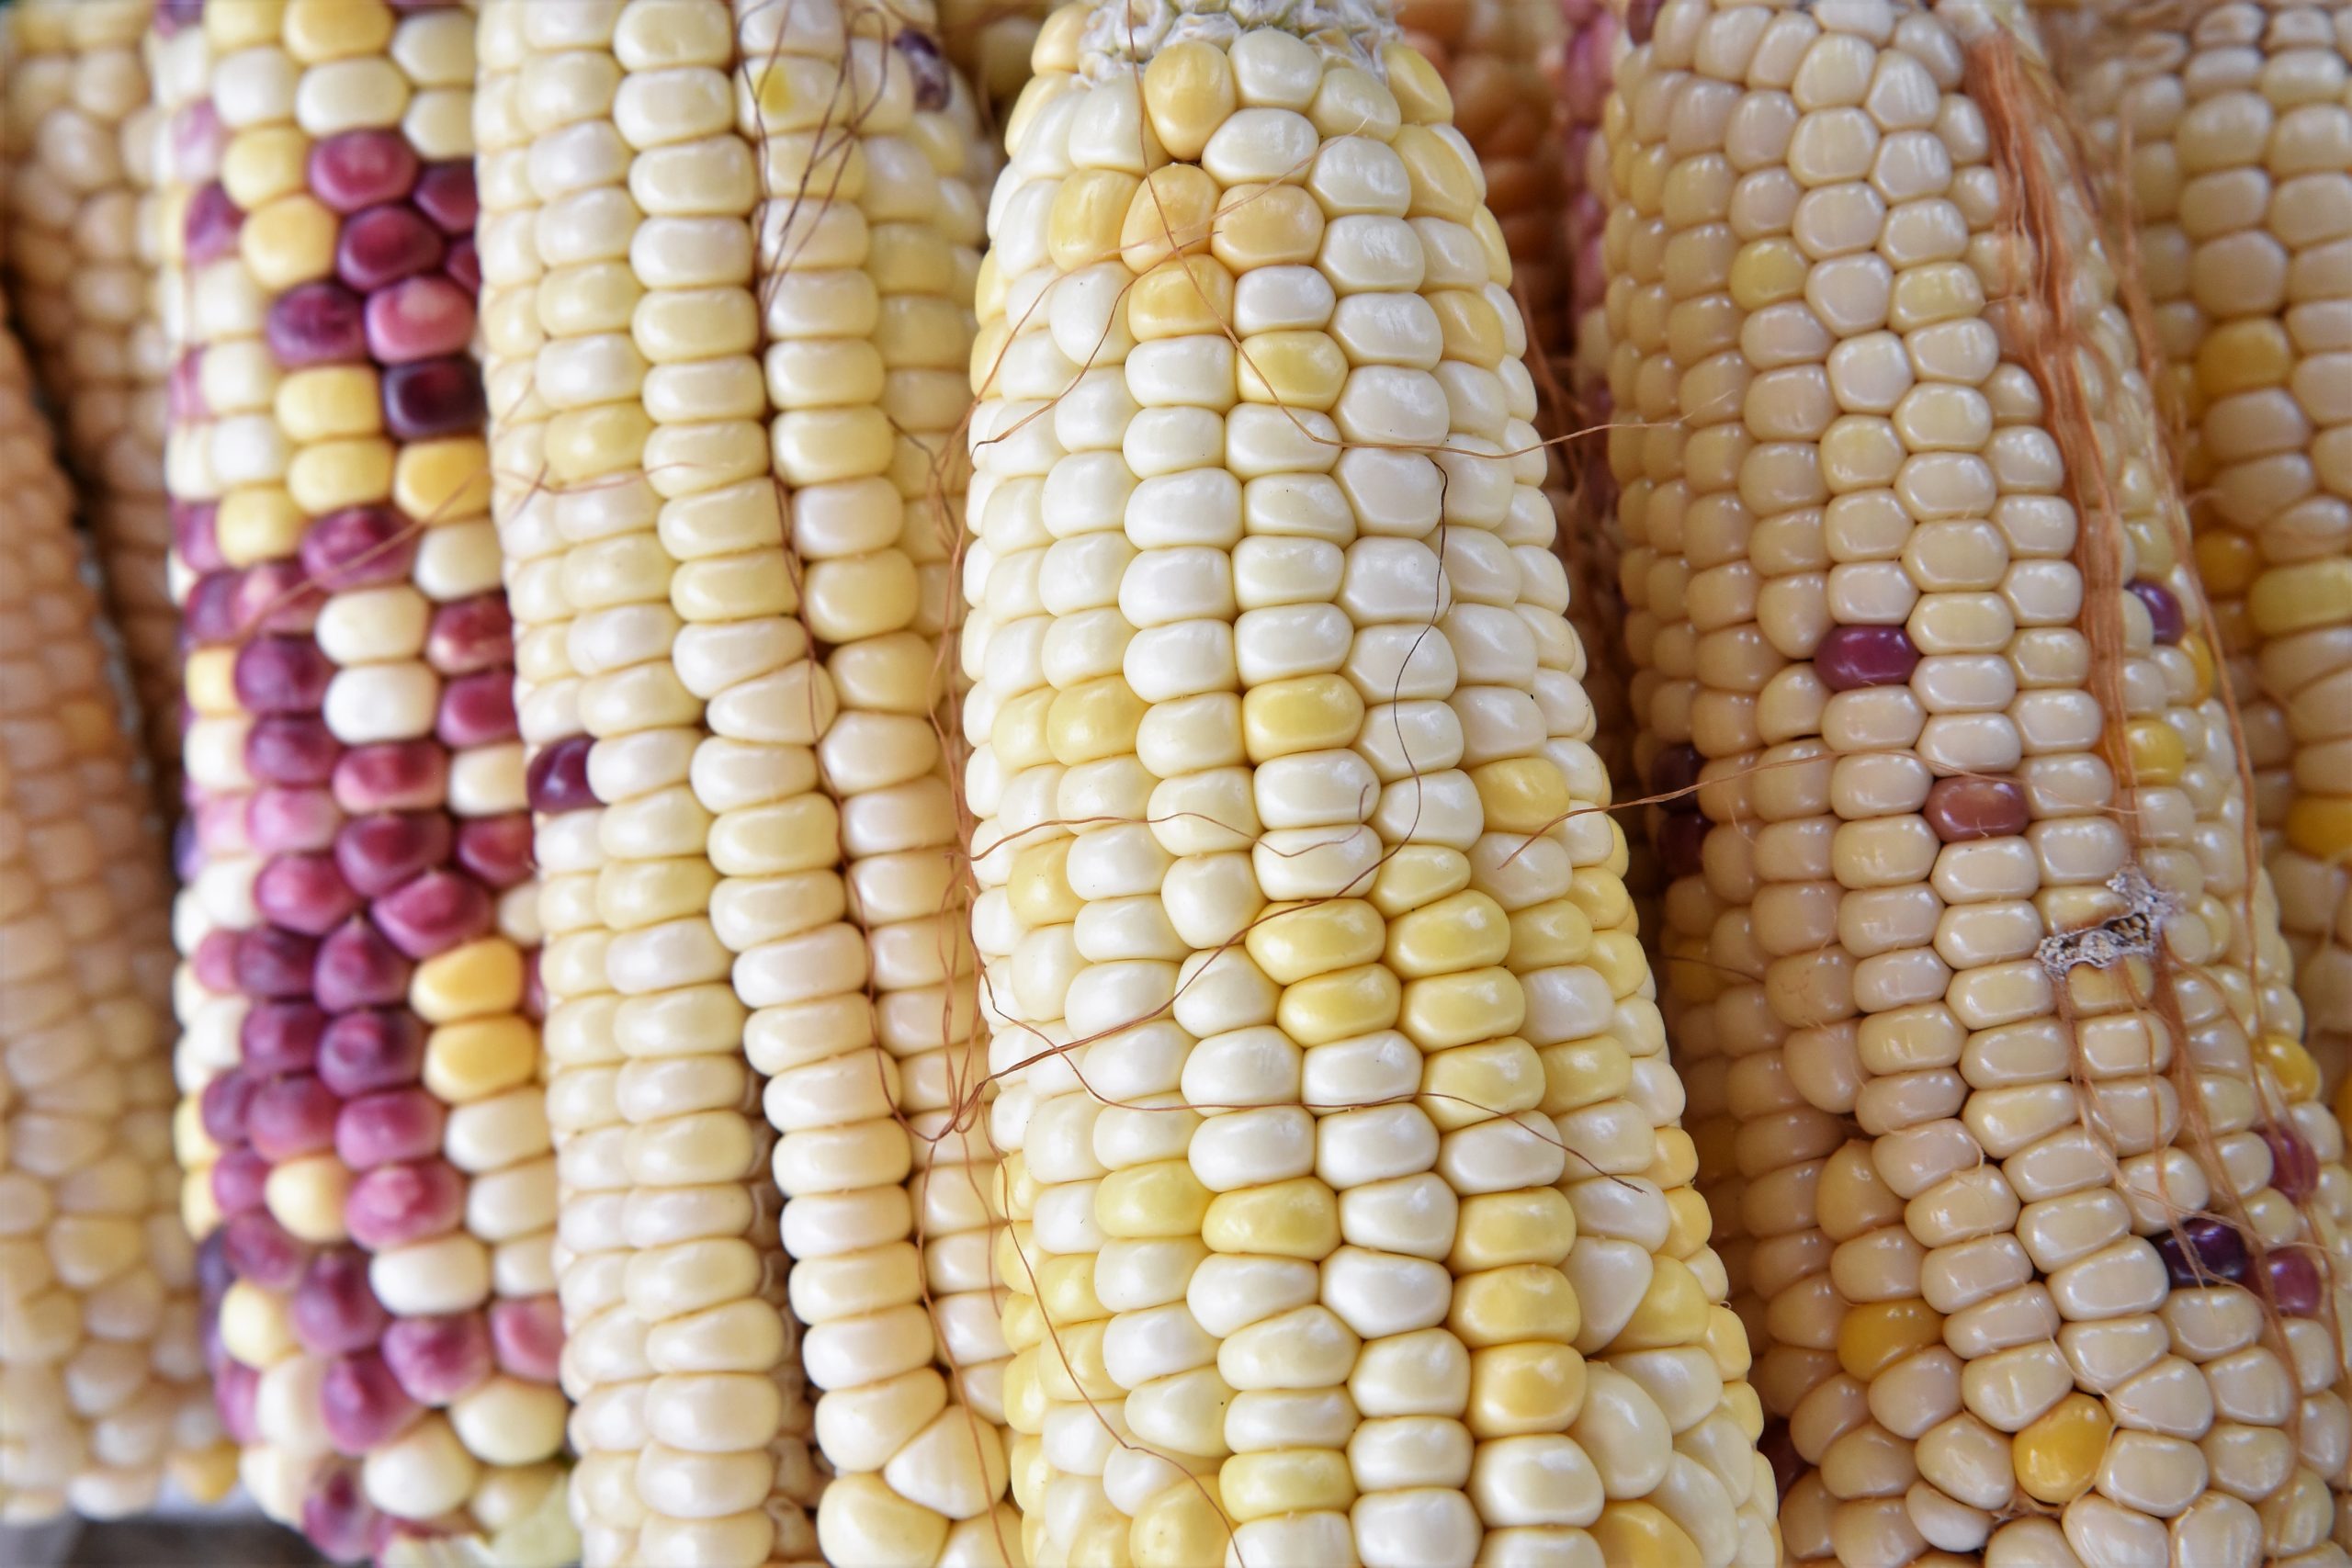 Corn kernel